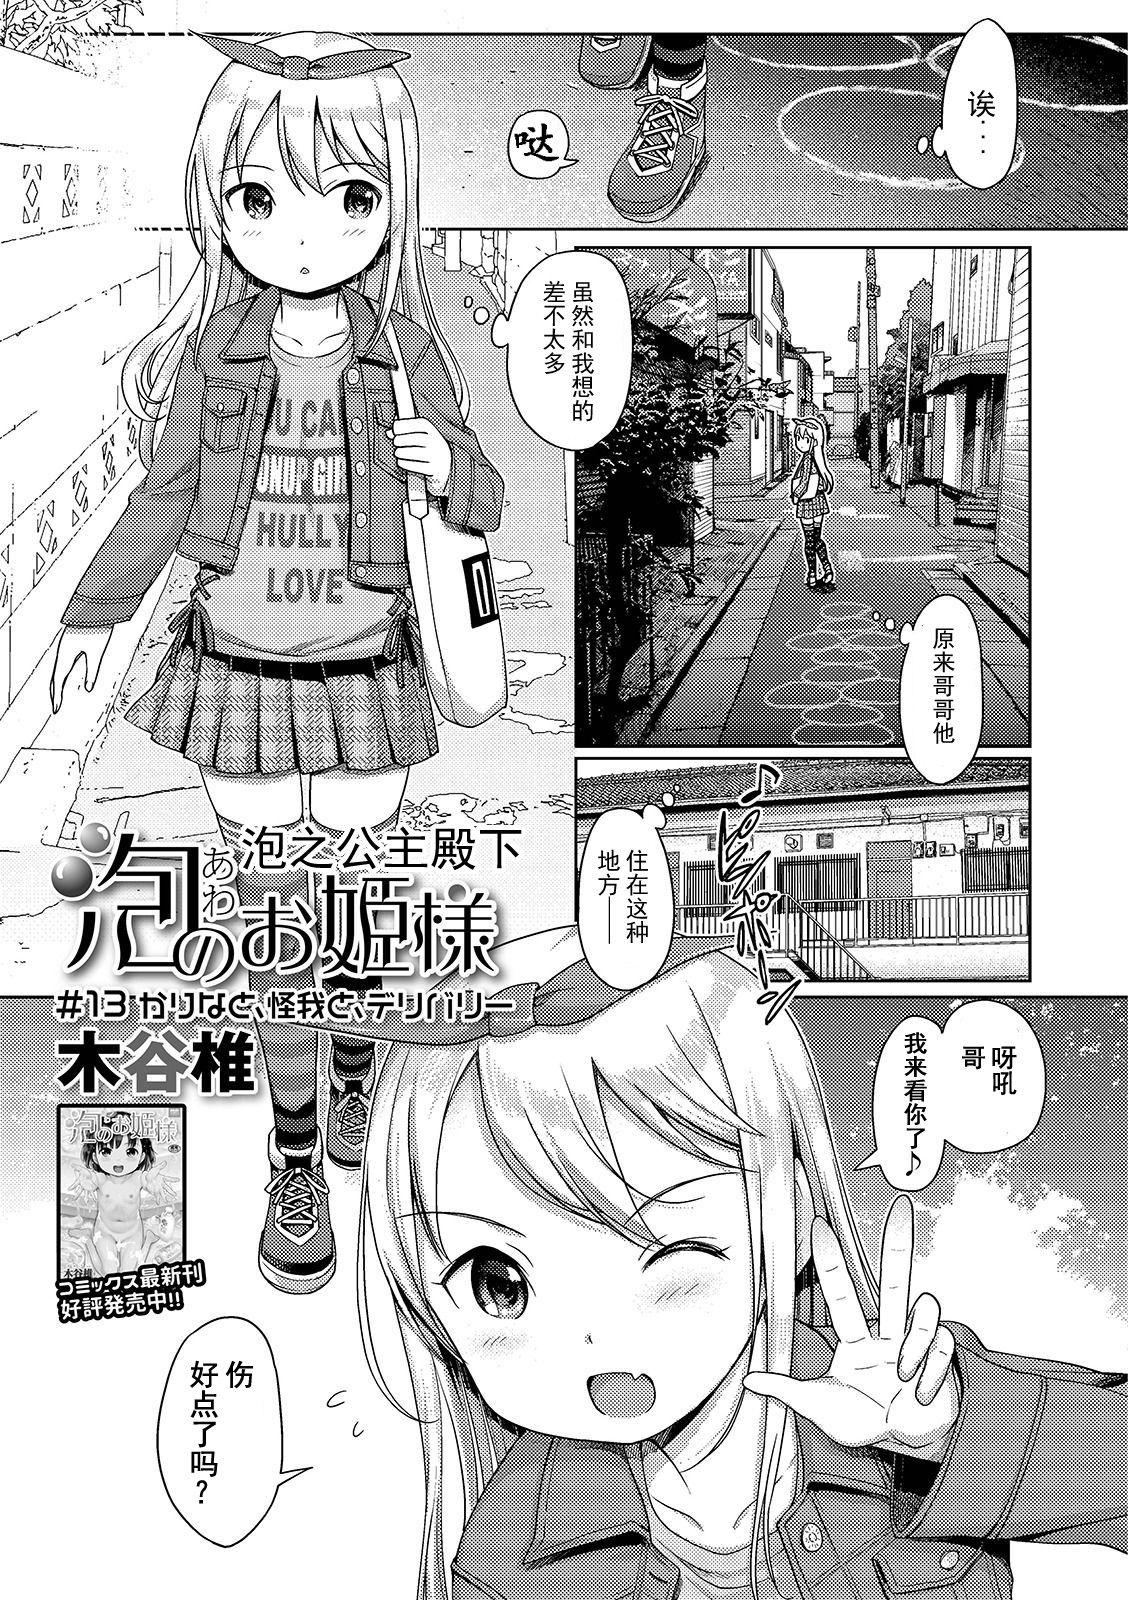 Mum Awa no Ohime-sama #13 Karina to, Kega to, Delivery Spit - Page 2